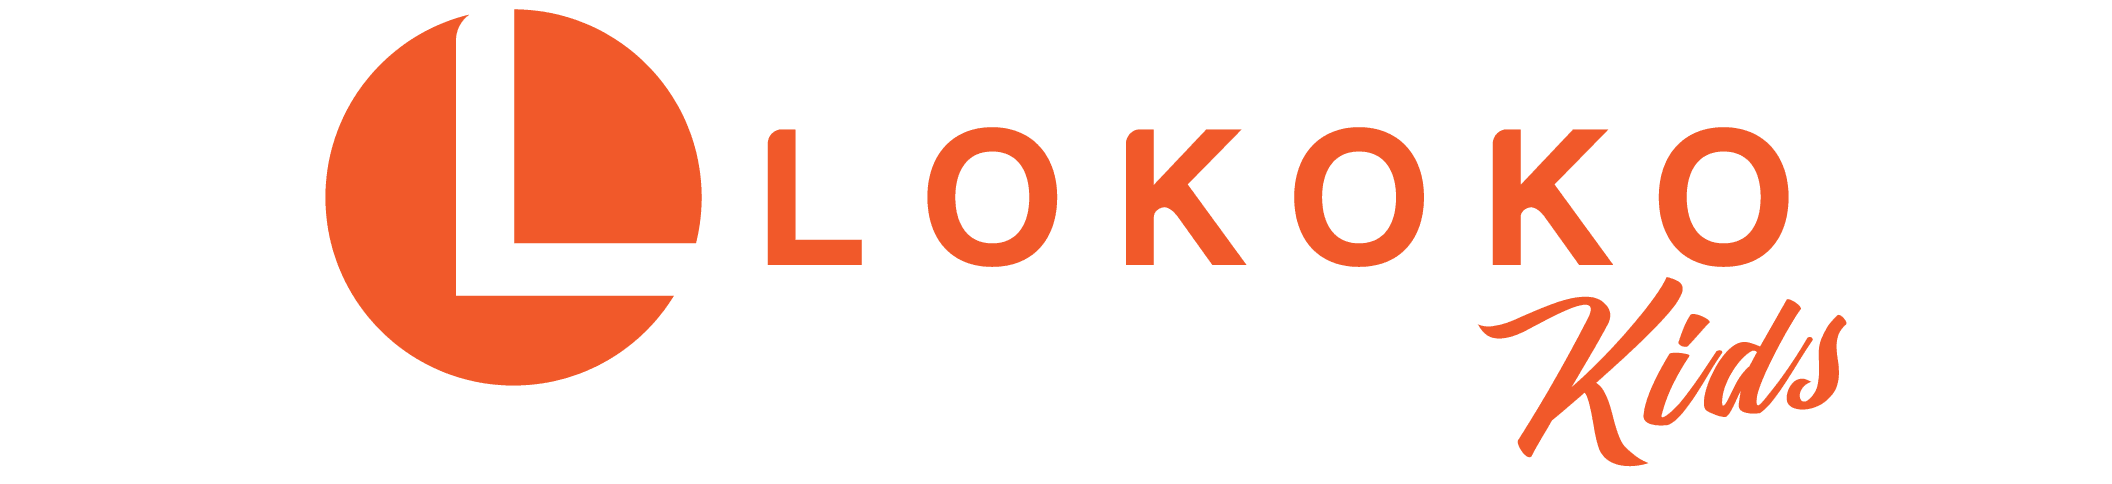 Lokoko